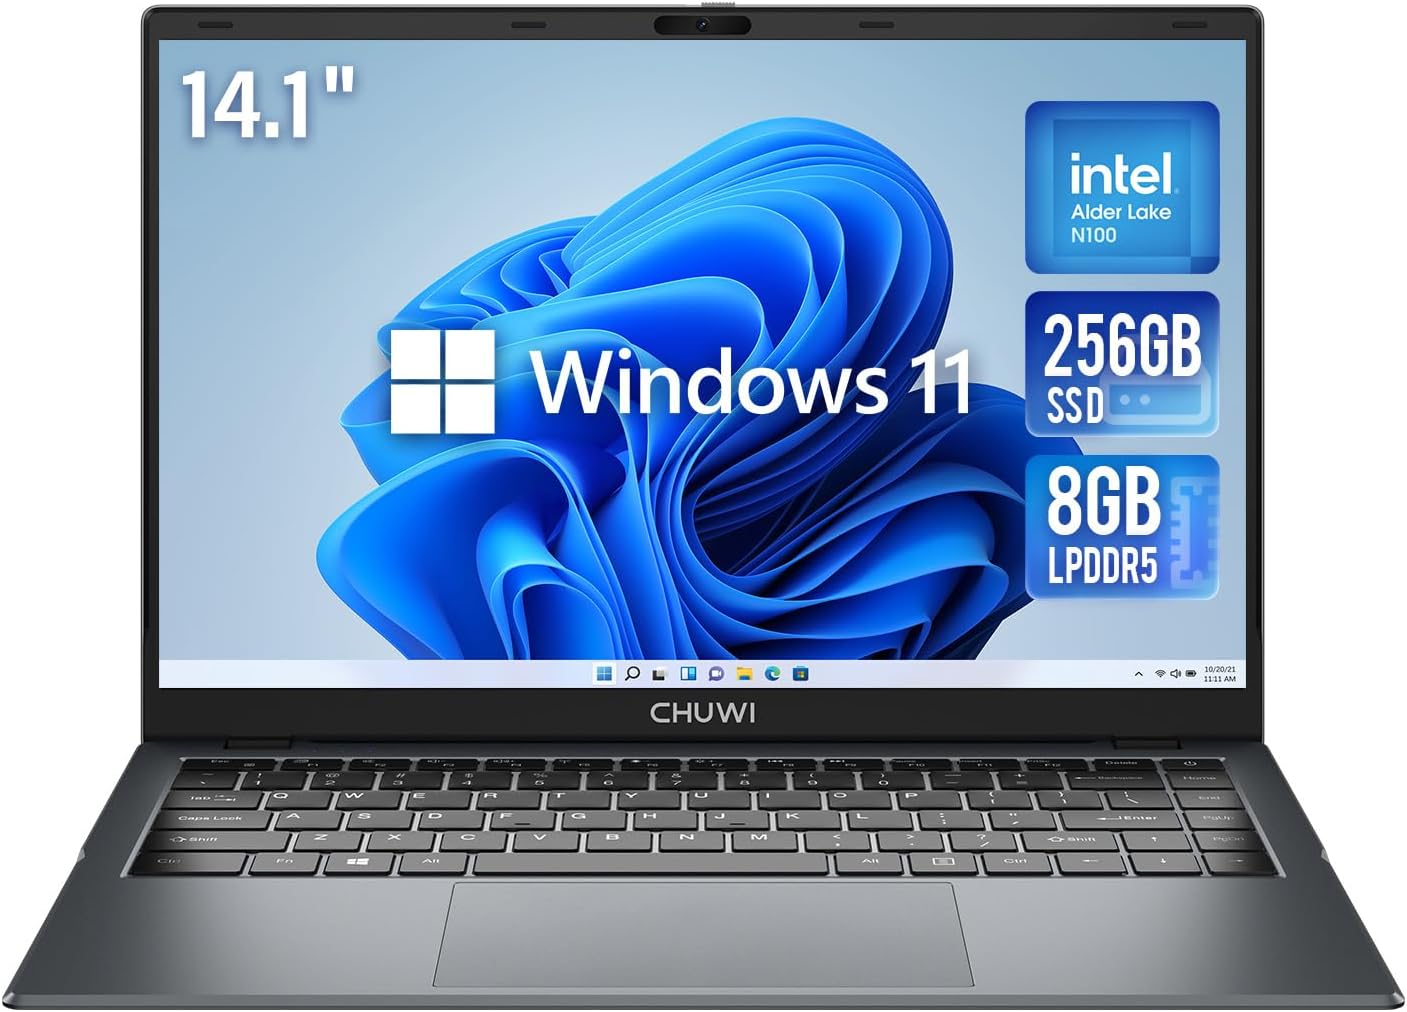 CHUWI Upgraded GemiBook XPro Intel N100 Laptop, 14.1'' Windows 11 Laptop Computer 8GB RAM 256GB SSD, 12th Gen Intel Alder Lake N100 (Up to 3.4GHz), 1920X1080 FHD Display, HDMI/WiFi 6/BT5.2/Webcam/38WH